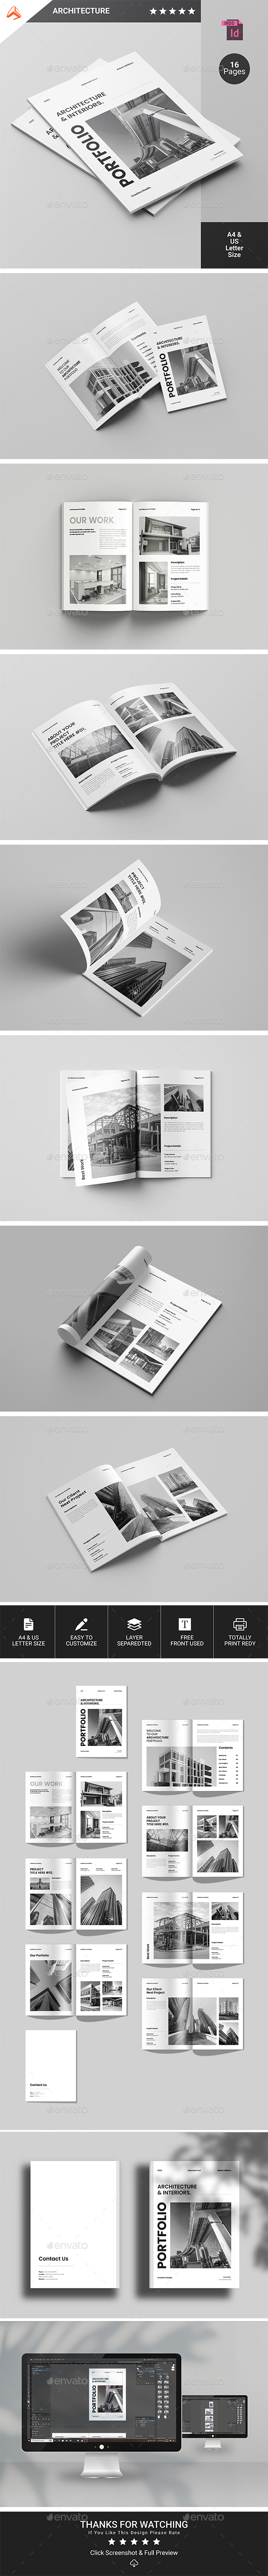 Architecture Brochure Template Design Layout